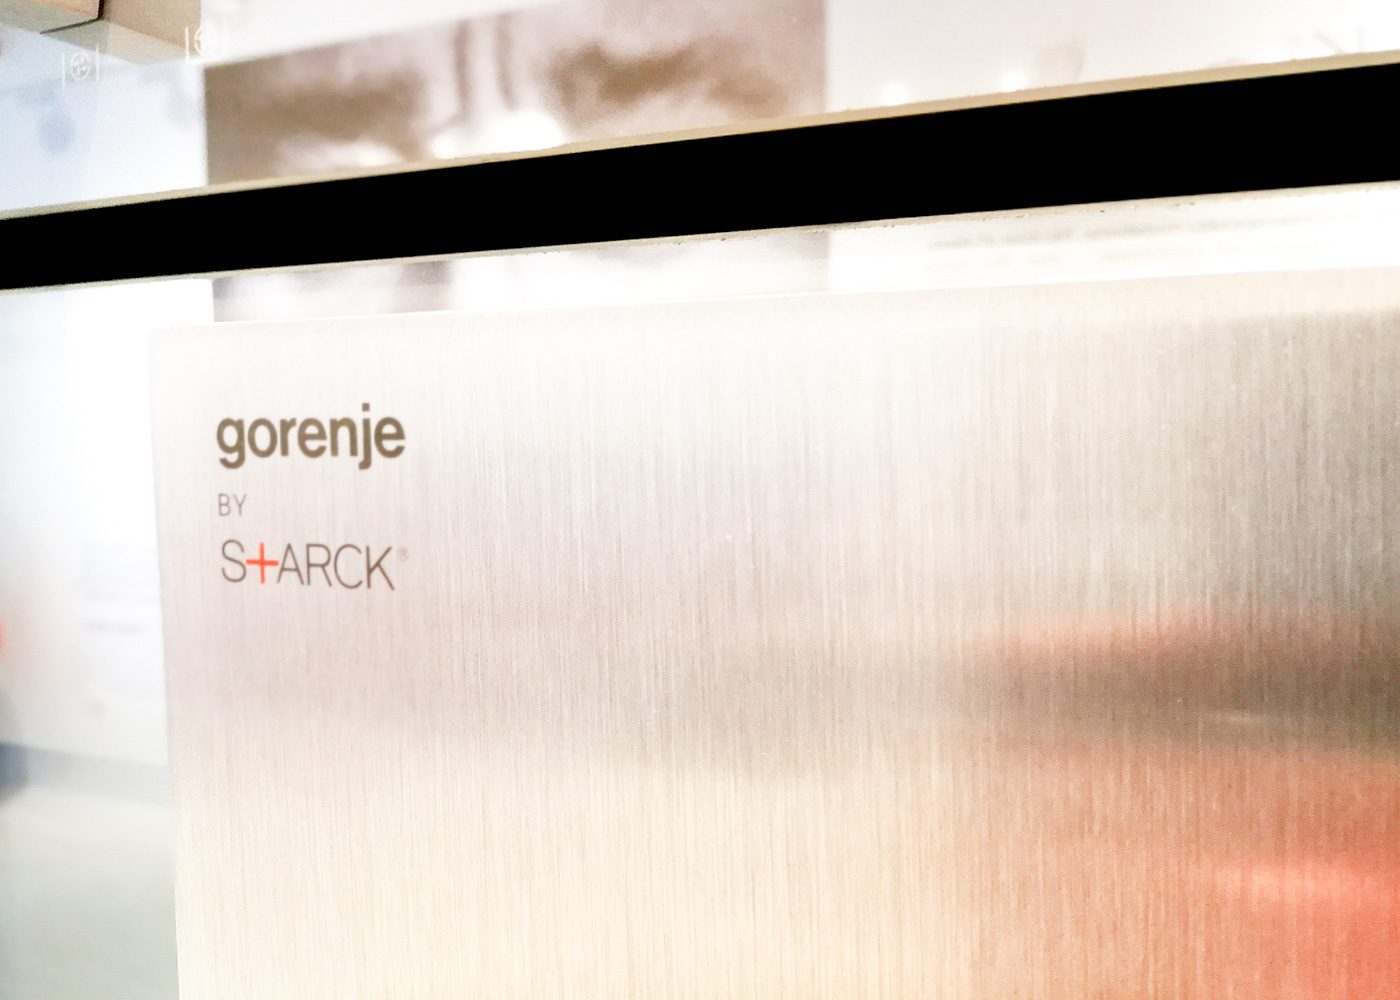 GORENJE x STARCK. The brand has a collaboration with designer Philippe Starck.  